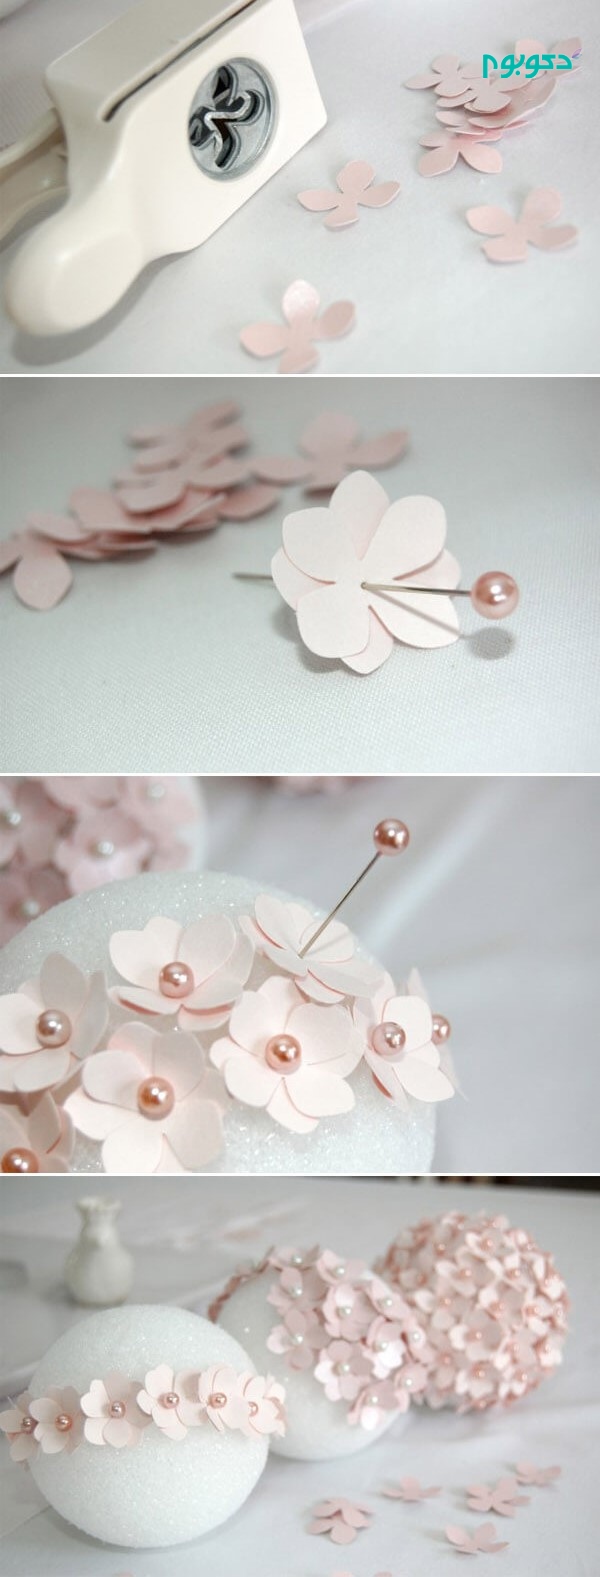 09-paper-decor-crafts-ideas-homebnc.jpg